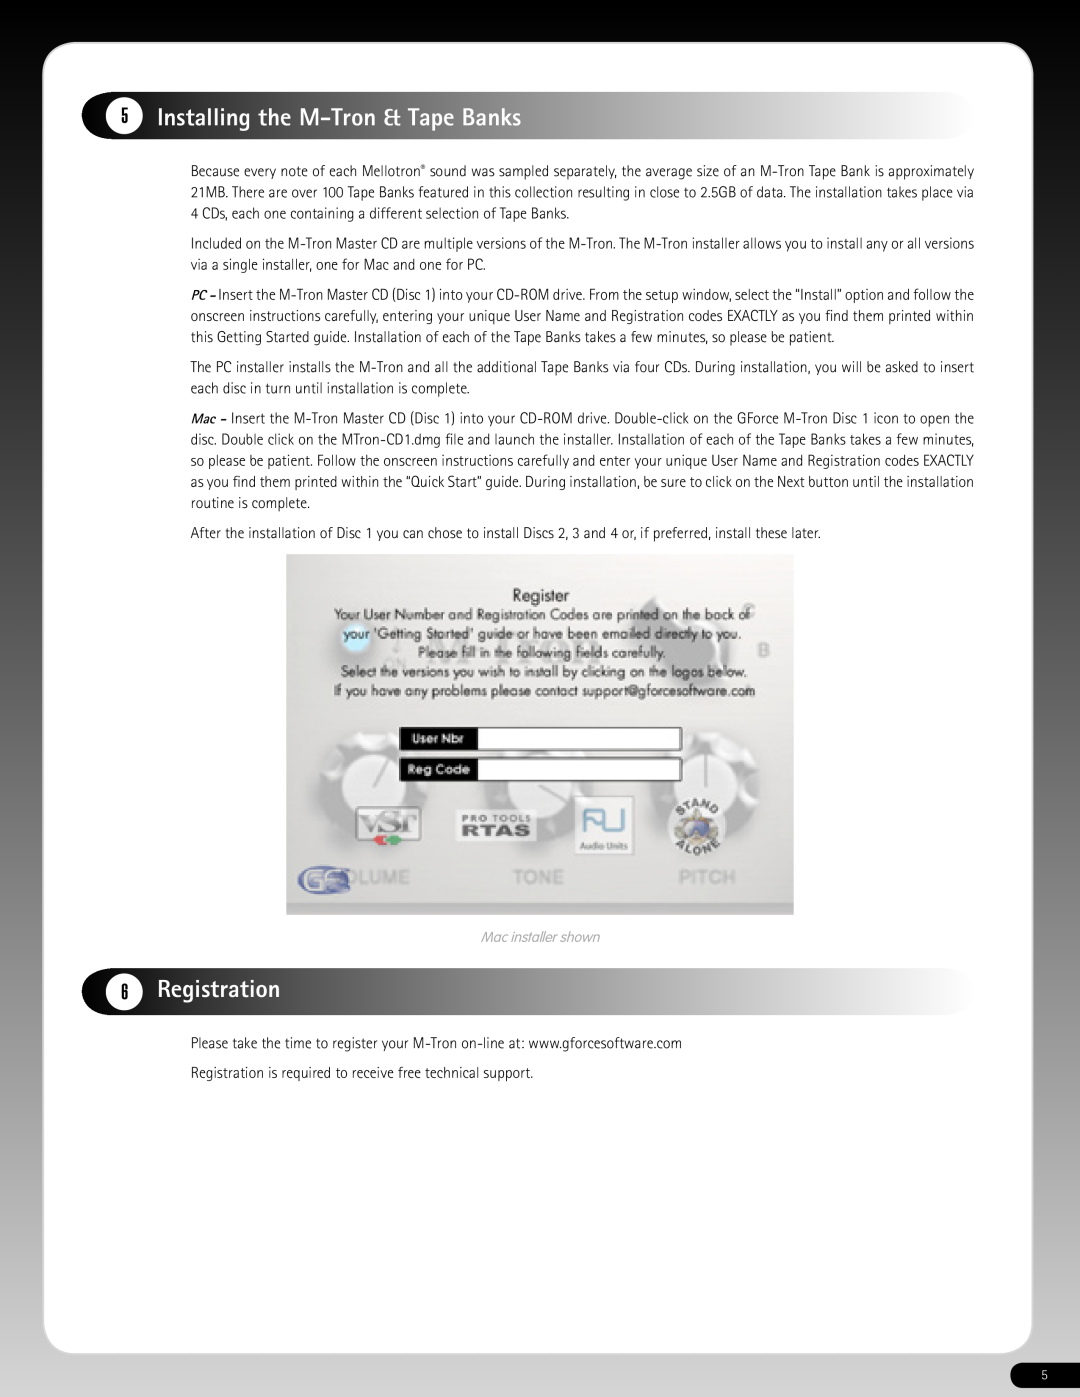 M-Audio 640-118 manual 5Installing the M-Tron& Tape Banks, 6Registration, Mac installer shown 